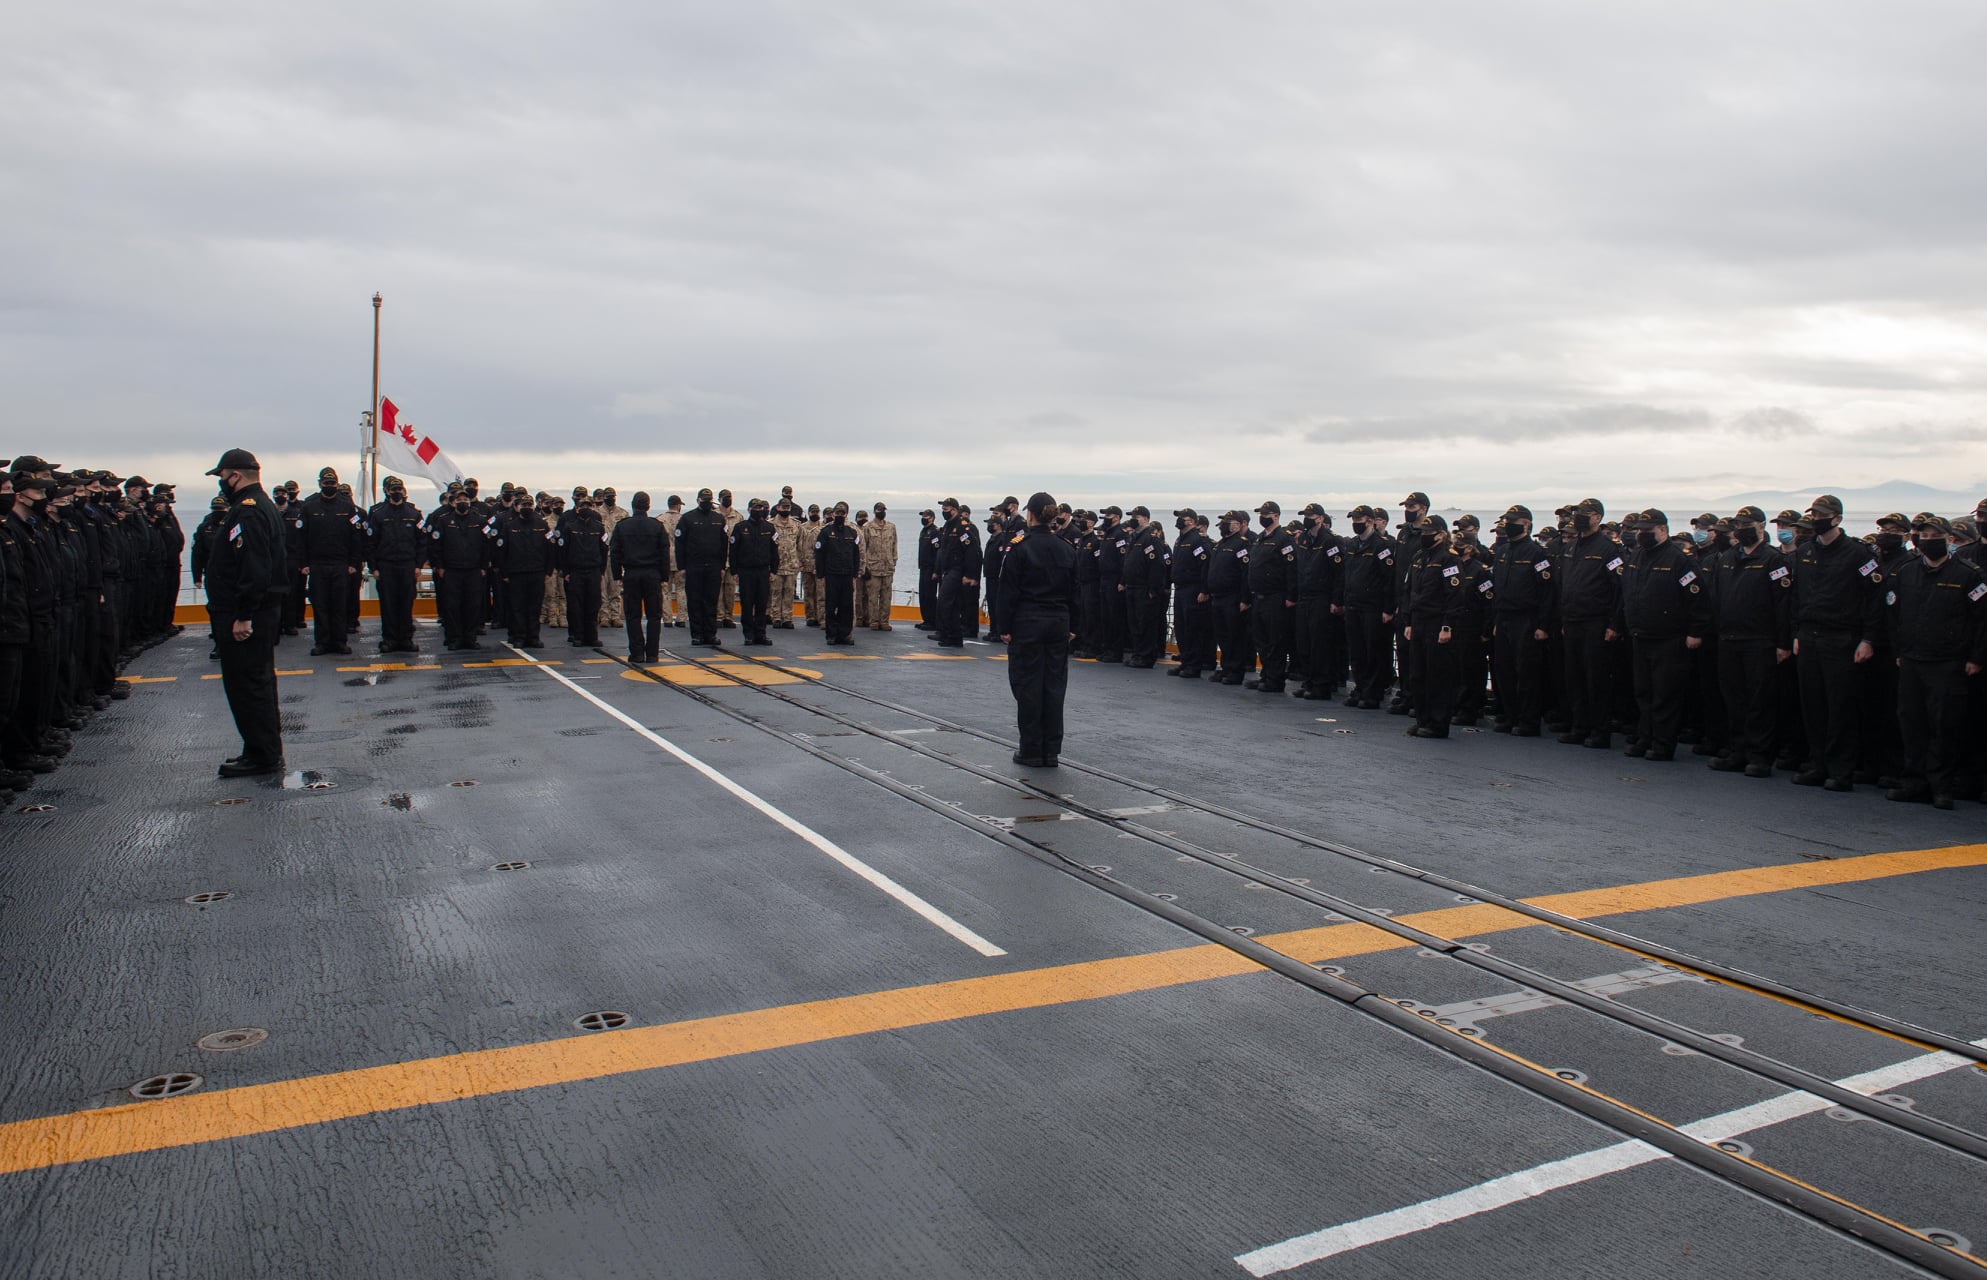 HMCS Winnipeg’s ship’s company